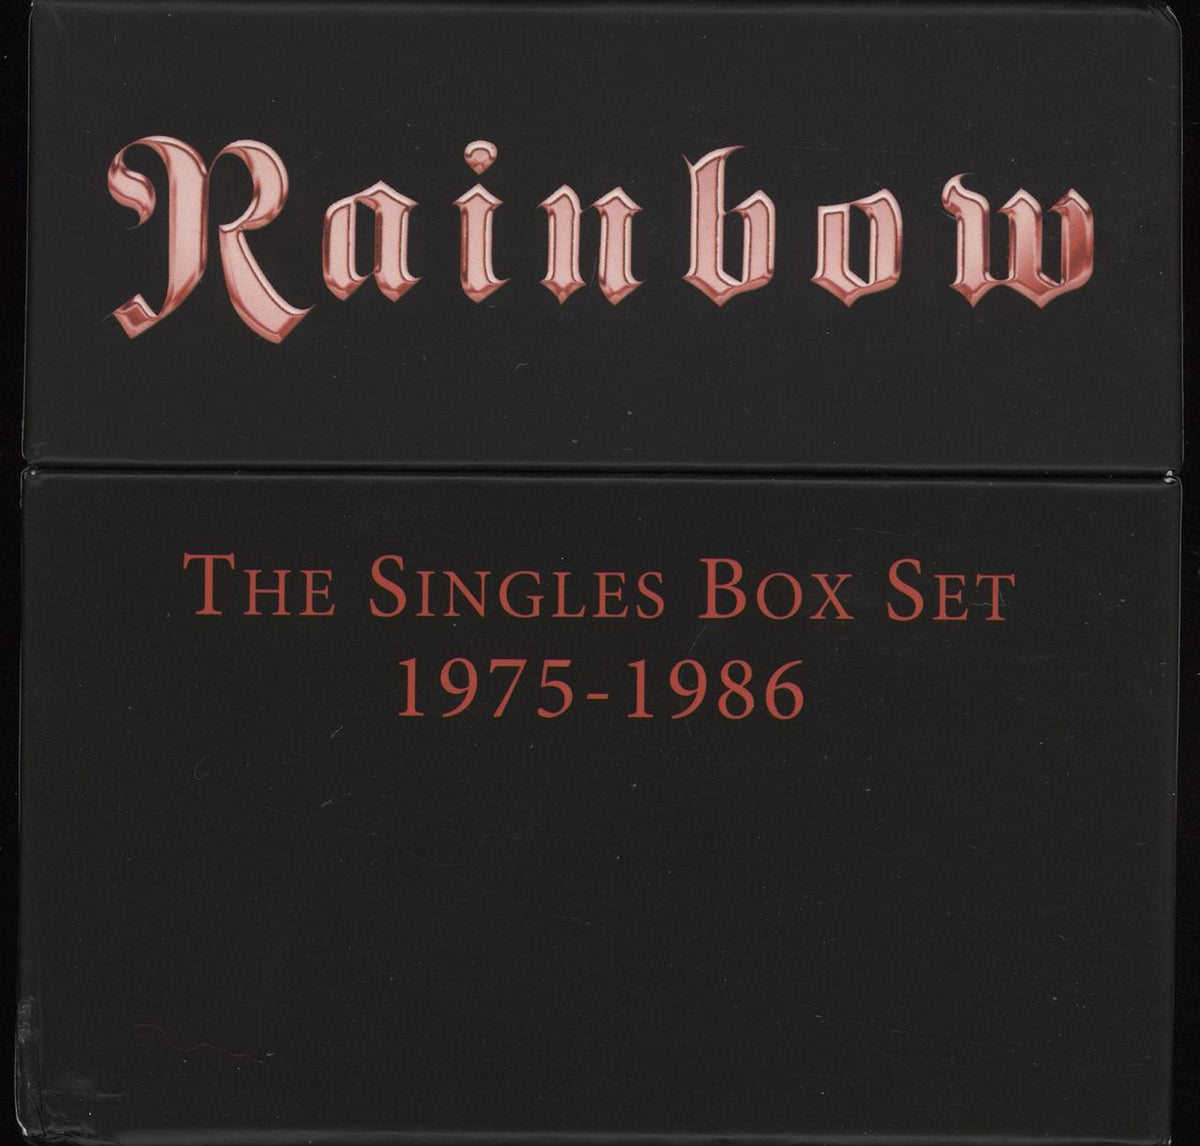 Rainbow The Singles Box Set 1975 - 1986 UK Cd album box set